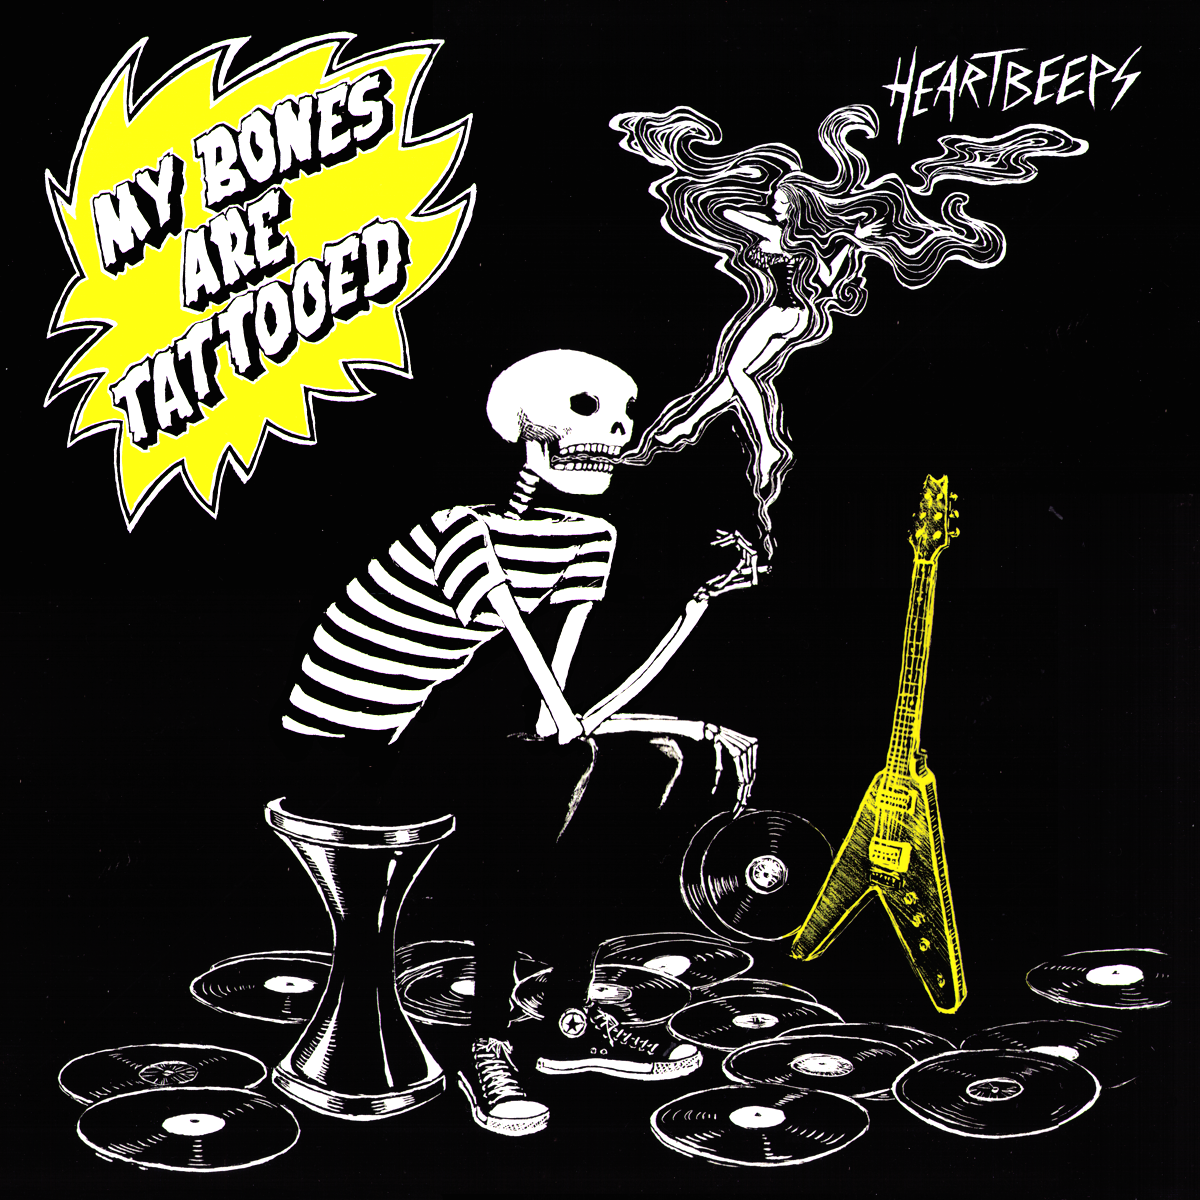 Heartbeeps- My Bones Are Tattooed LP ~DEAD BOYS / EX TV KILLERS!